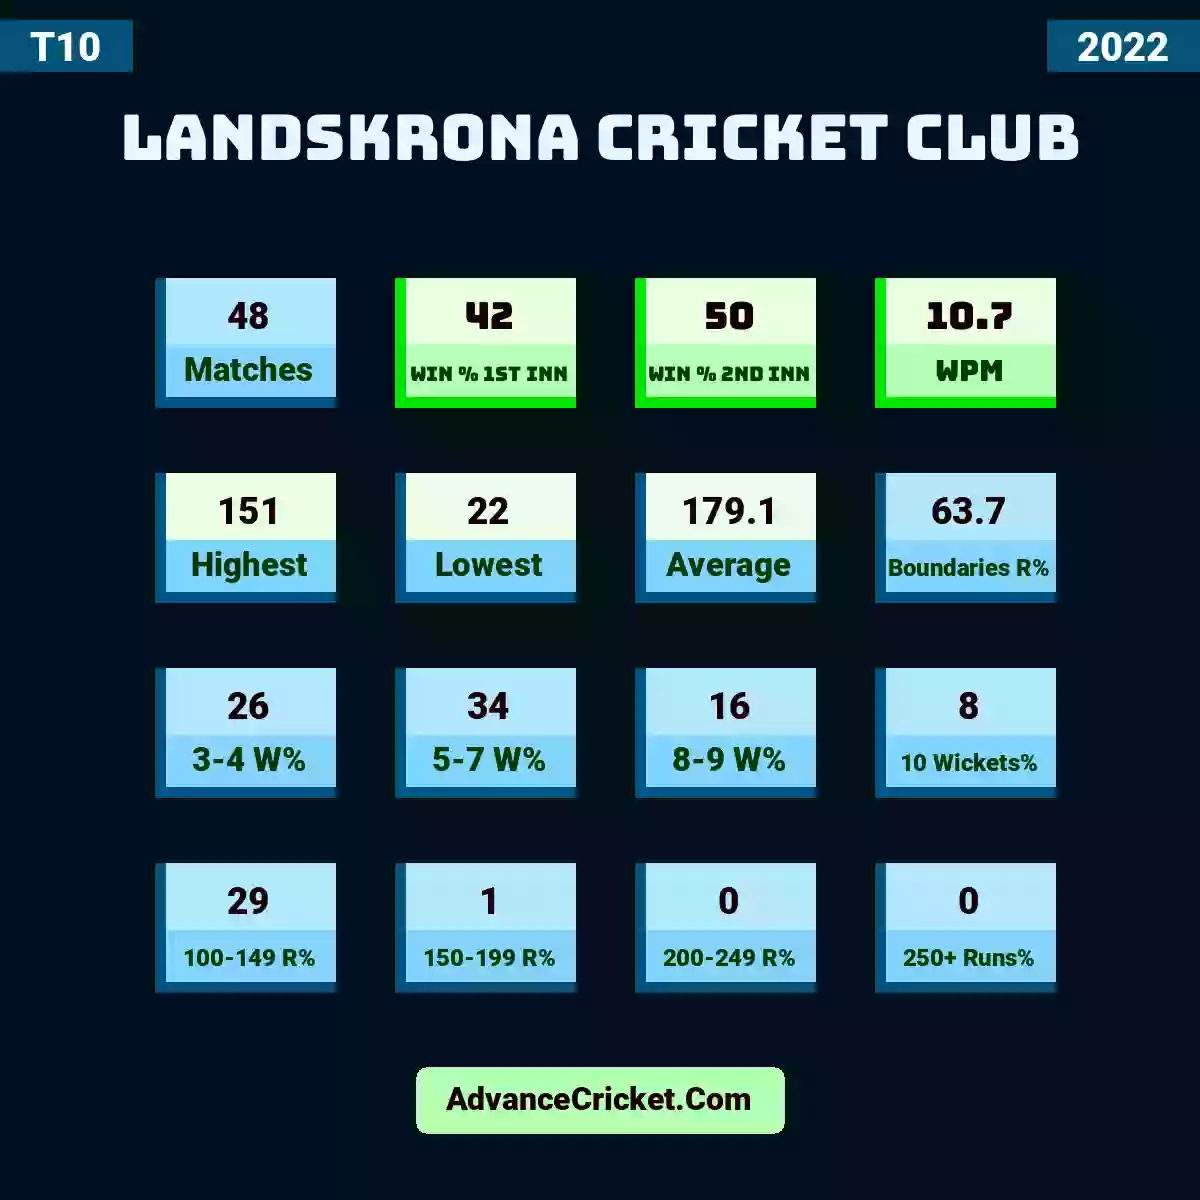 Image showing Landskrona Cricket Club with Matches: 48, Win % 1st Inn: 42, Win % 2nd Inn: 50, WPM: 10.7, Highest: 151, Lowest: 22, Average: 179.1, Boundaries R%: 63.7, 3-4 W%: 26, 5-7 W%: 34, 8-9 W%: 16, 10 Wickets%: 8, 100-149 R%: 29, 150-199 R%: 1, 200-249 R%: 0, 250+ Runs%: 0.